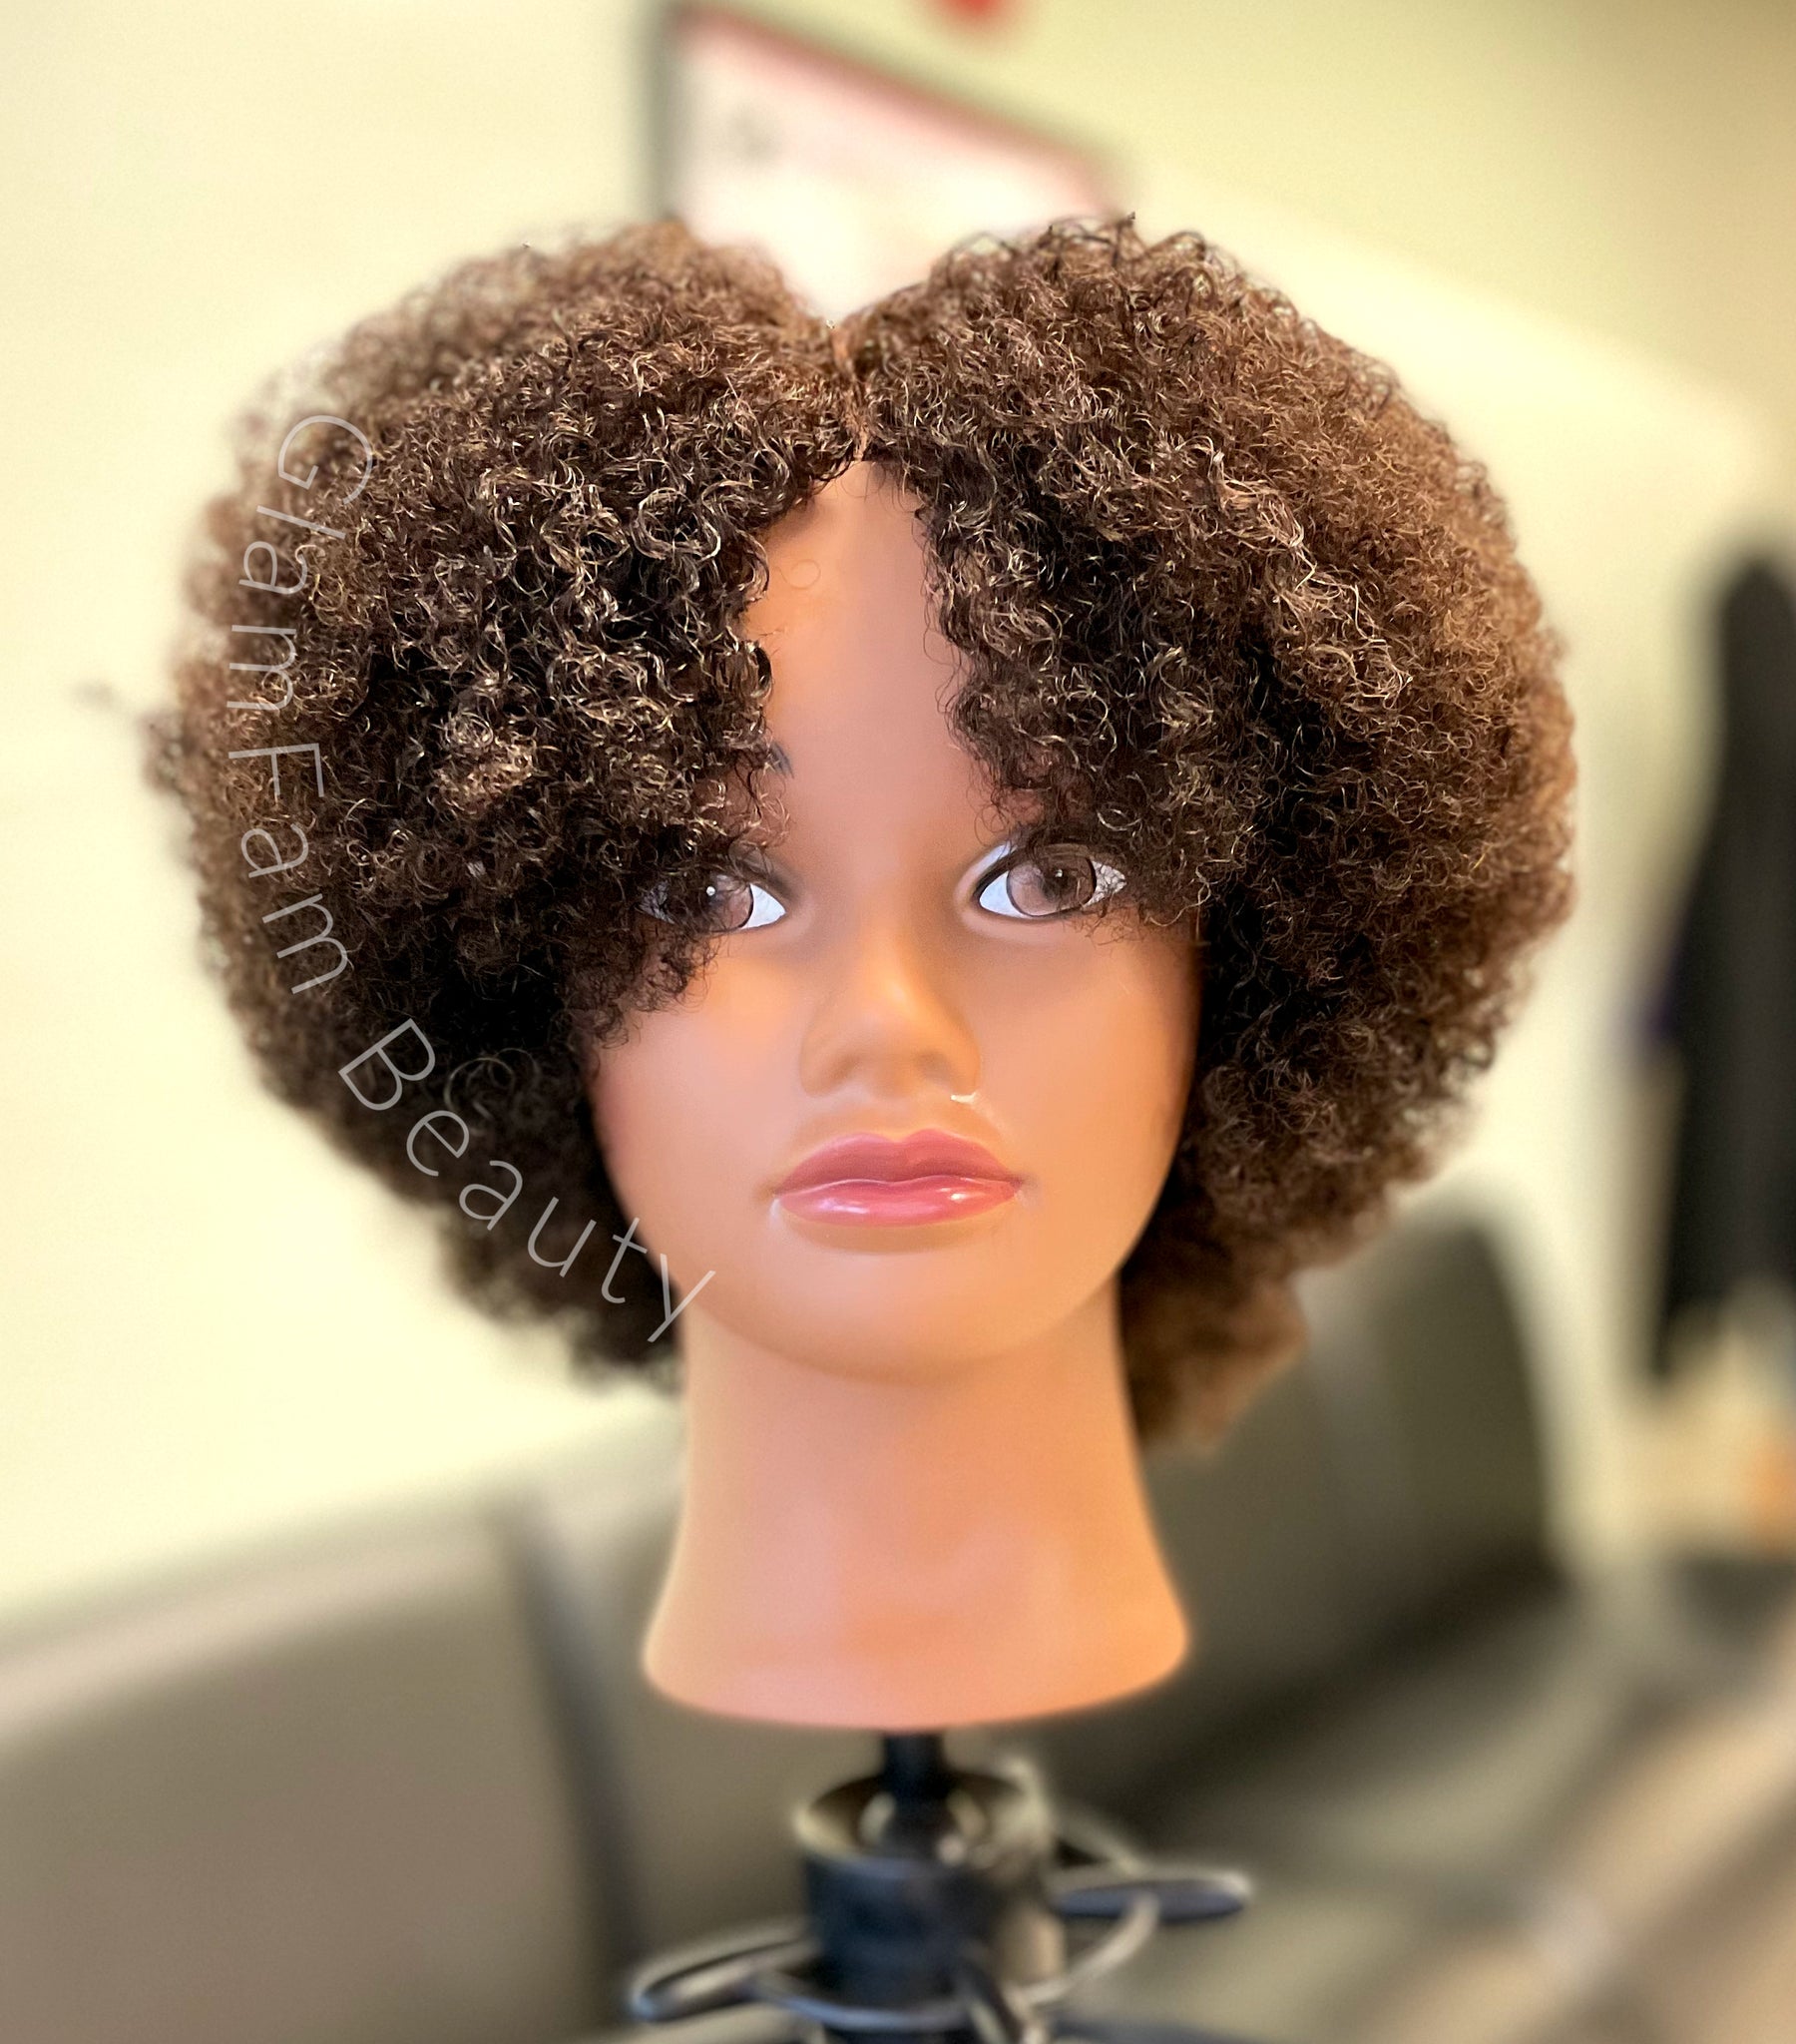 Hair Mannequin Head, Hair Braiding Mannequin Head Easy Use With